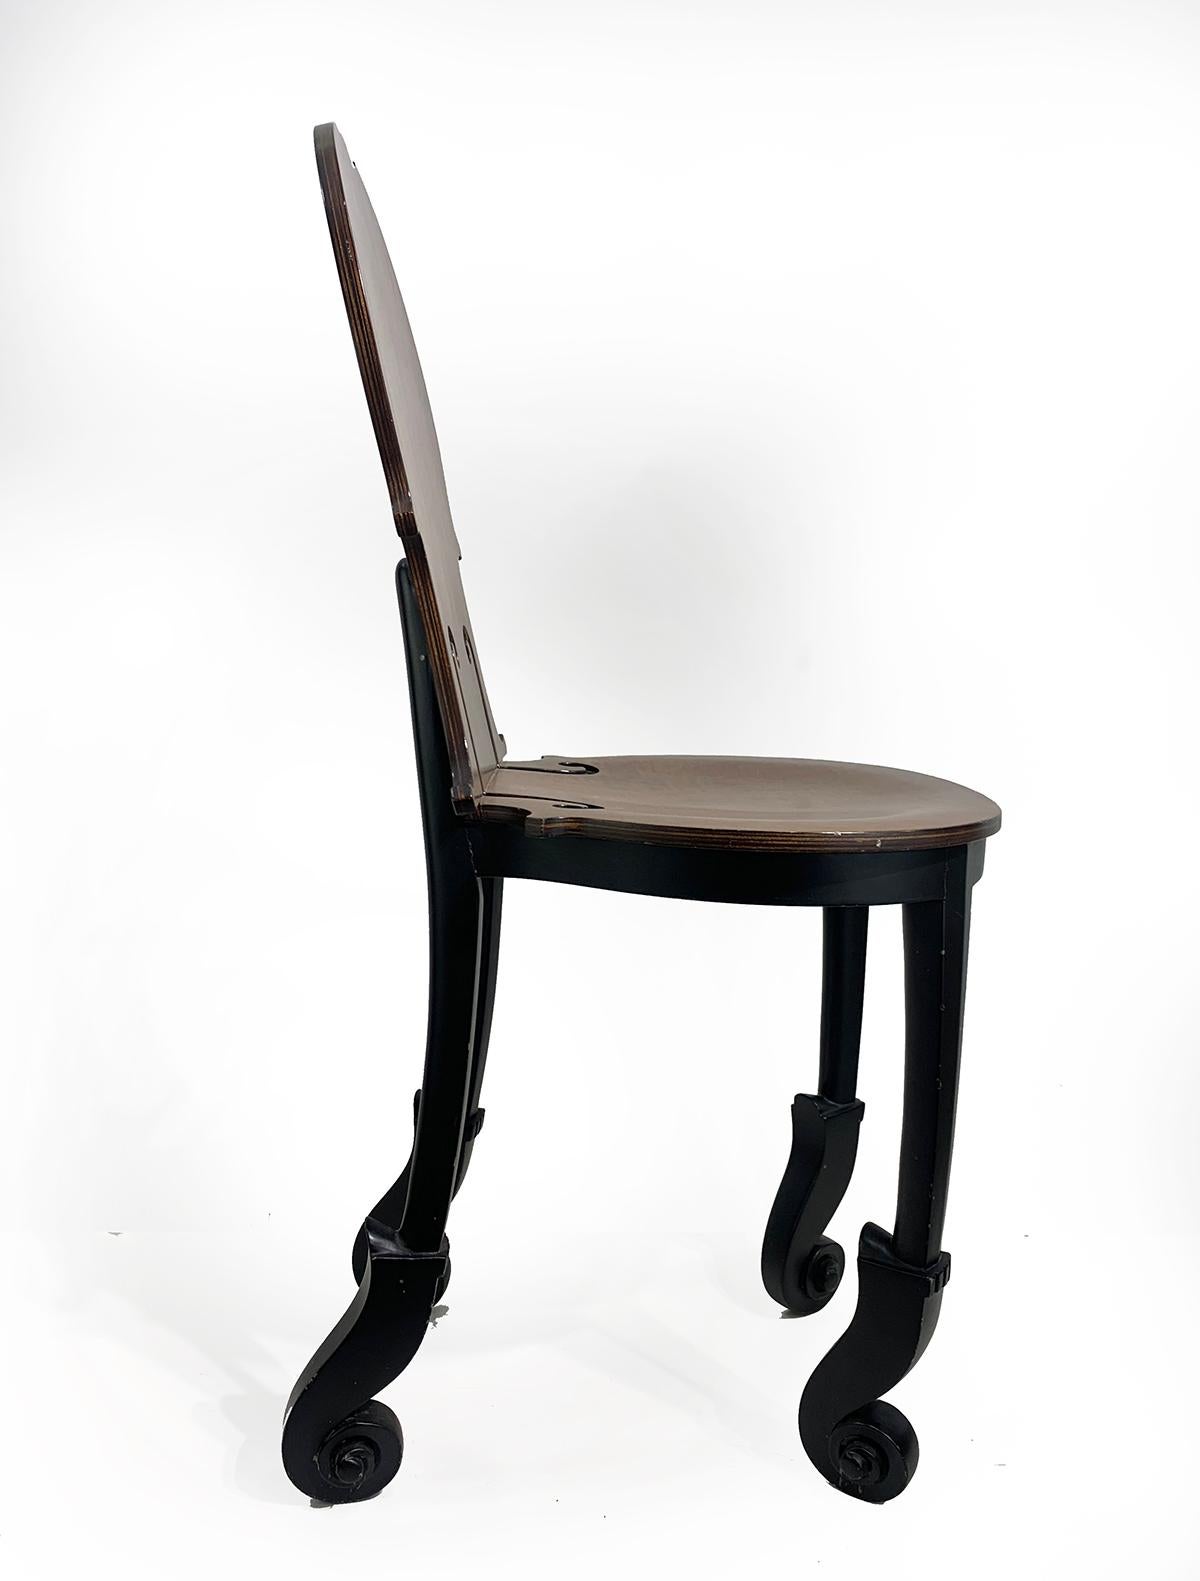 Unique Creation of Arman, 'CELLO' Chair, Editions Hugues Chevalier 1